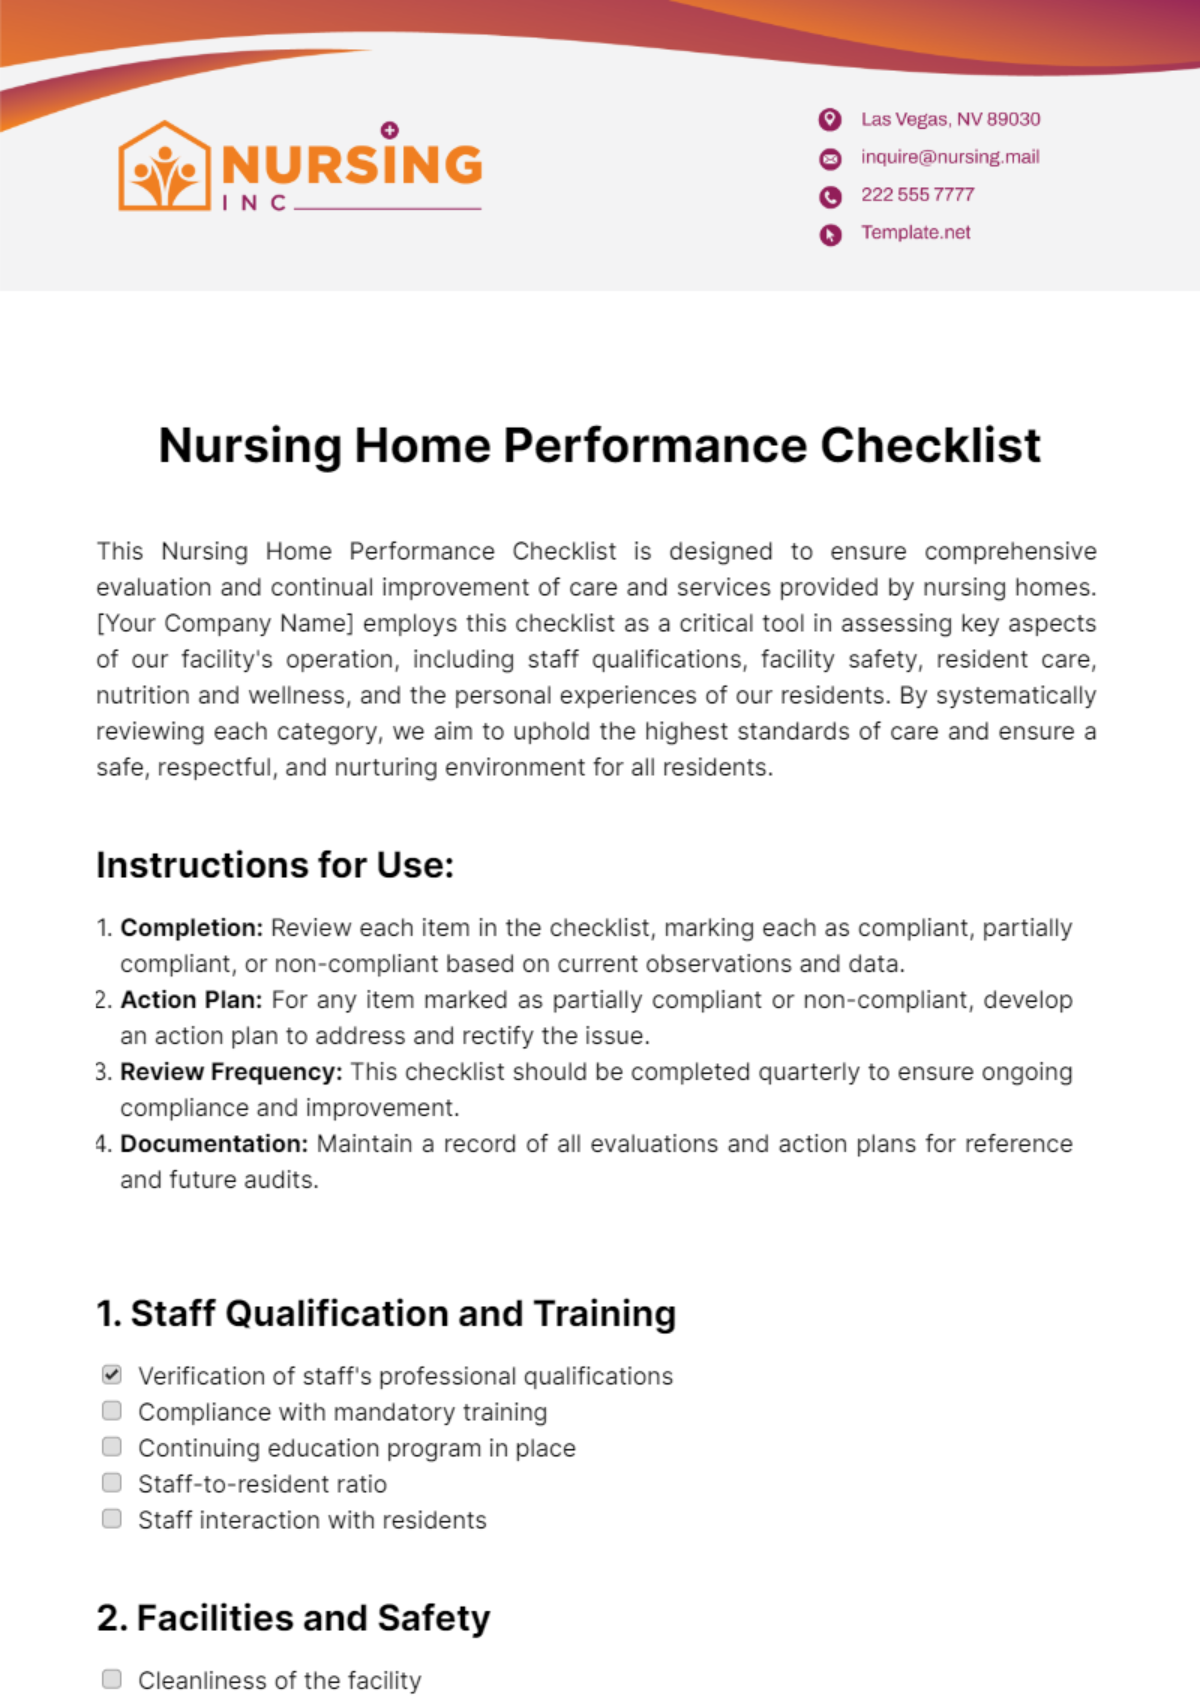 Nursing Home Performance Checklist Template